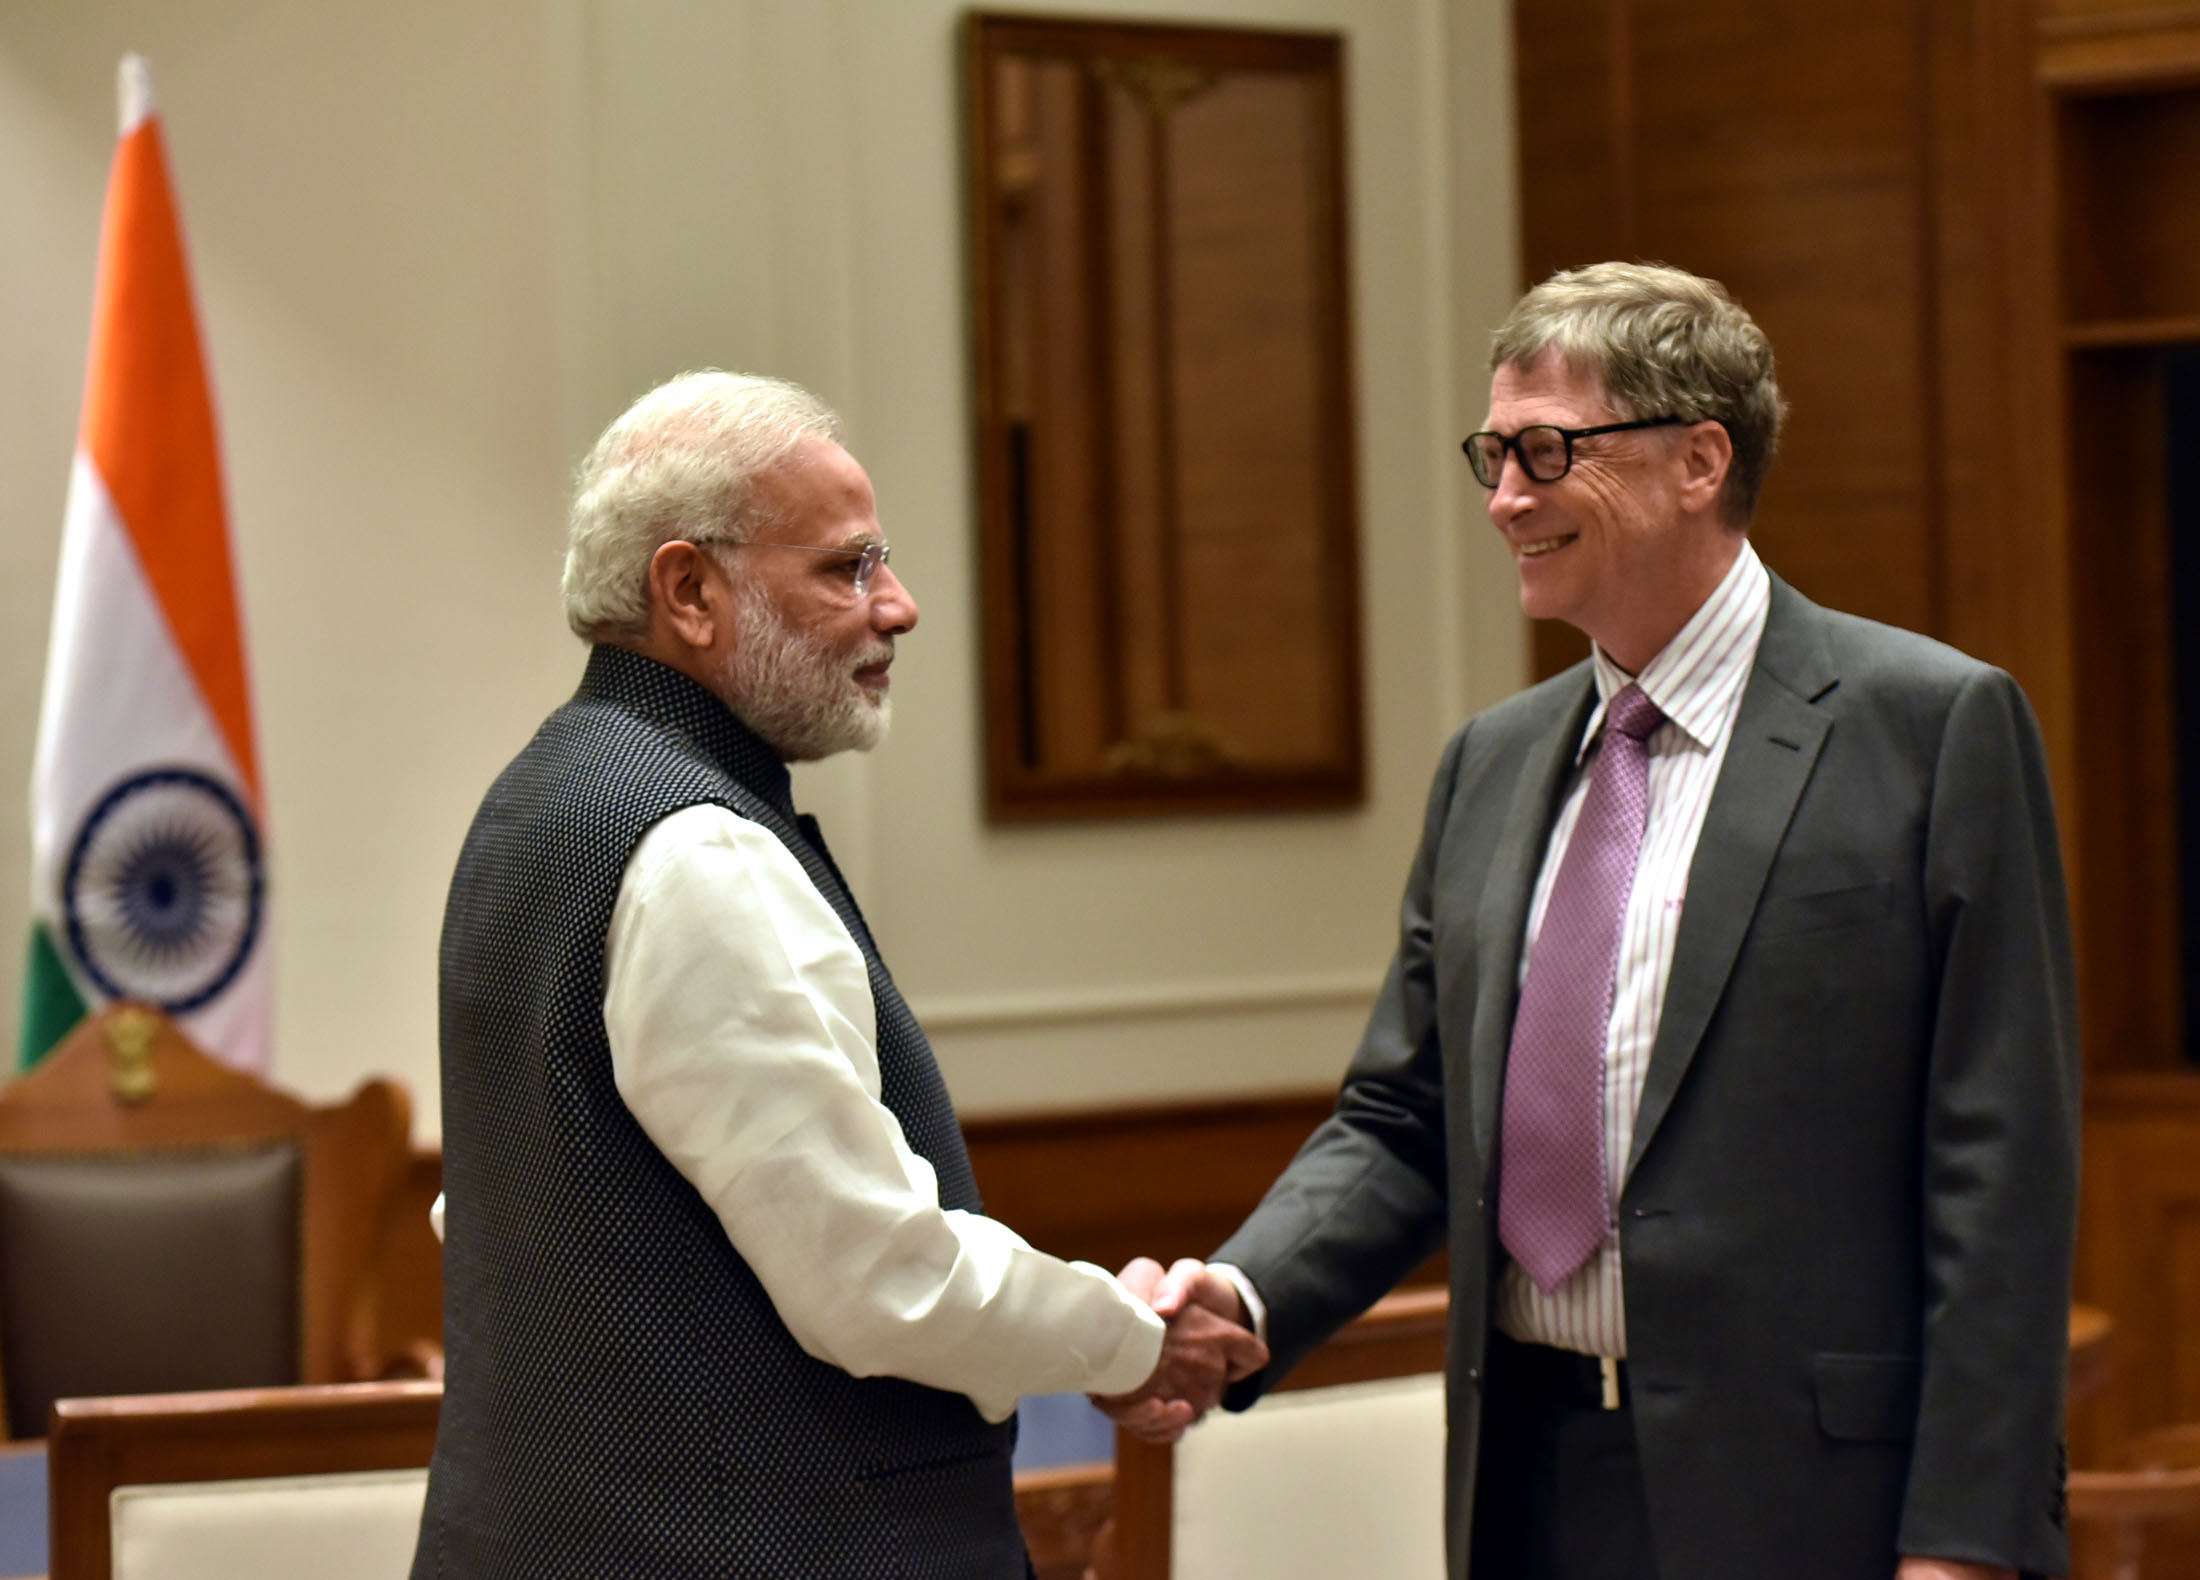 The Co-Chairman of the Bill & Melinda Gates Foundation, Mr. Bill Gates calls on the Prime Minister, Shri Narendra Modi, in New Delhi on November 16, 2016.